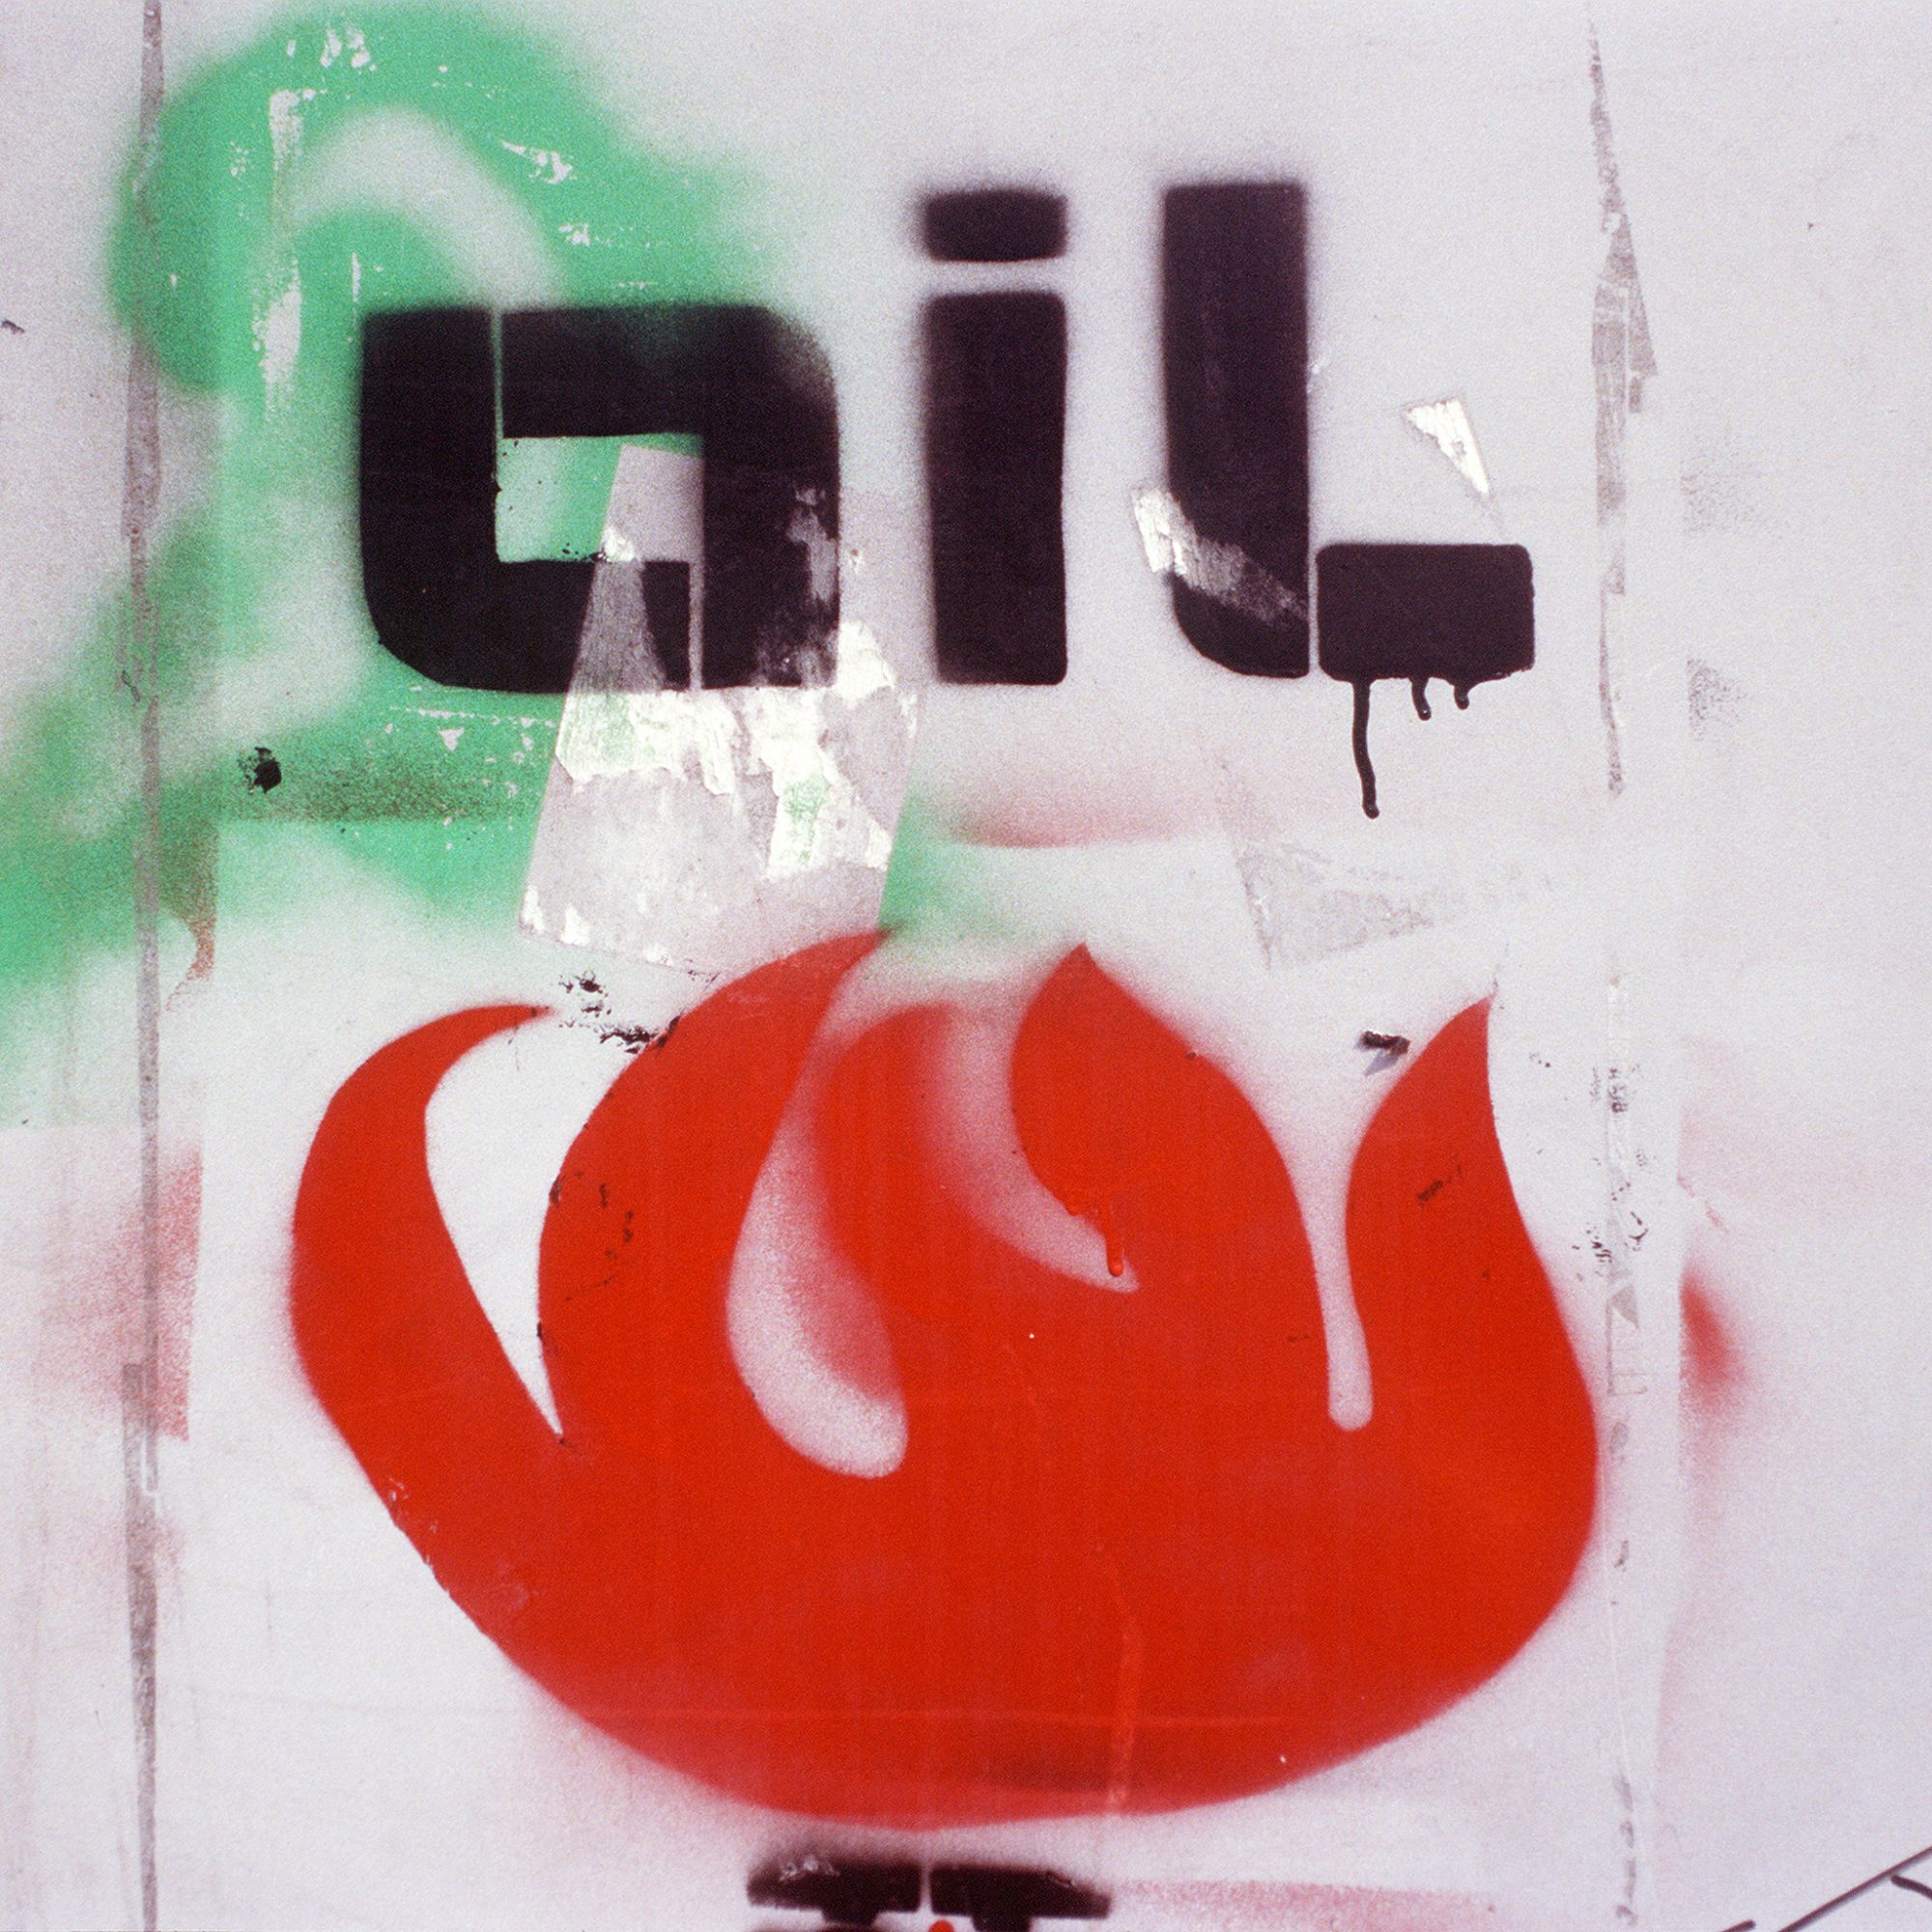 Protest graffiti against global oil industry